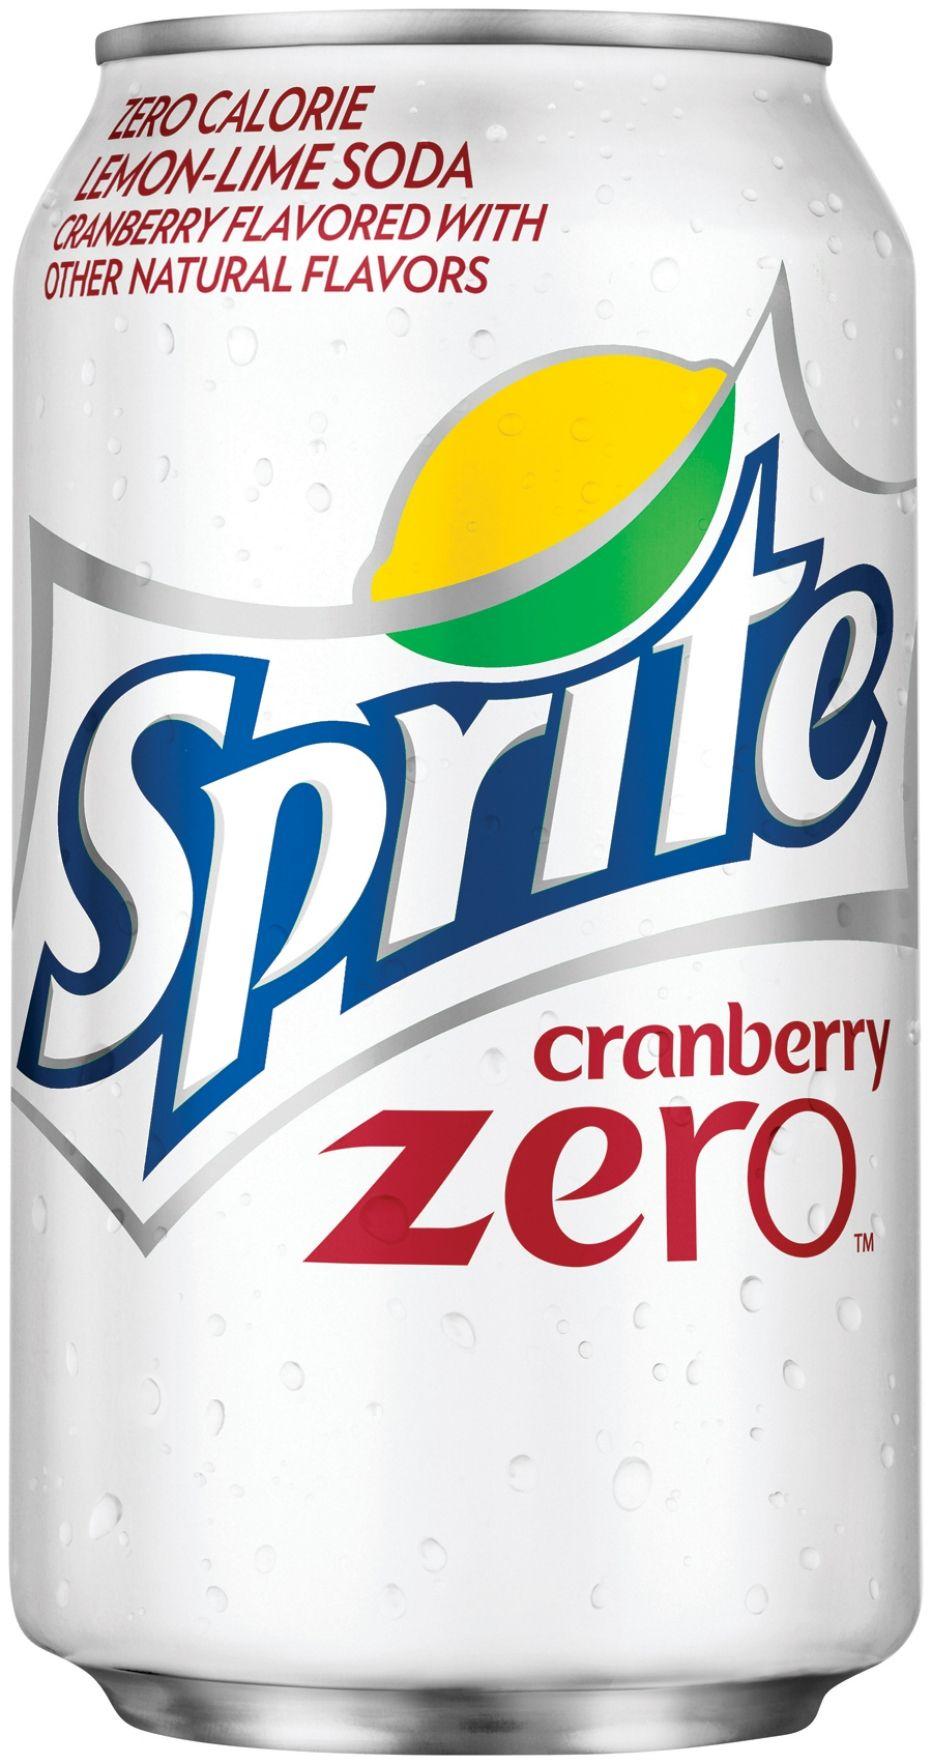 Sprite Logo - Sprite Cranberry Zero™: The Coca Cola Company